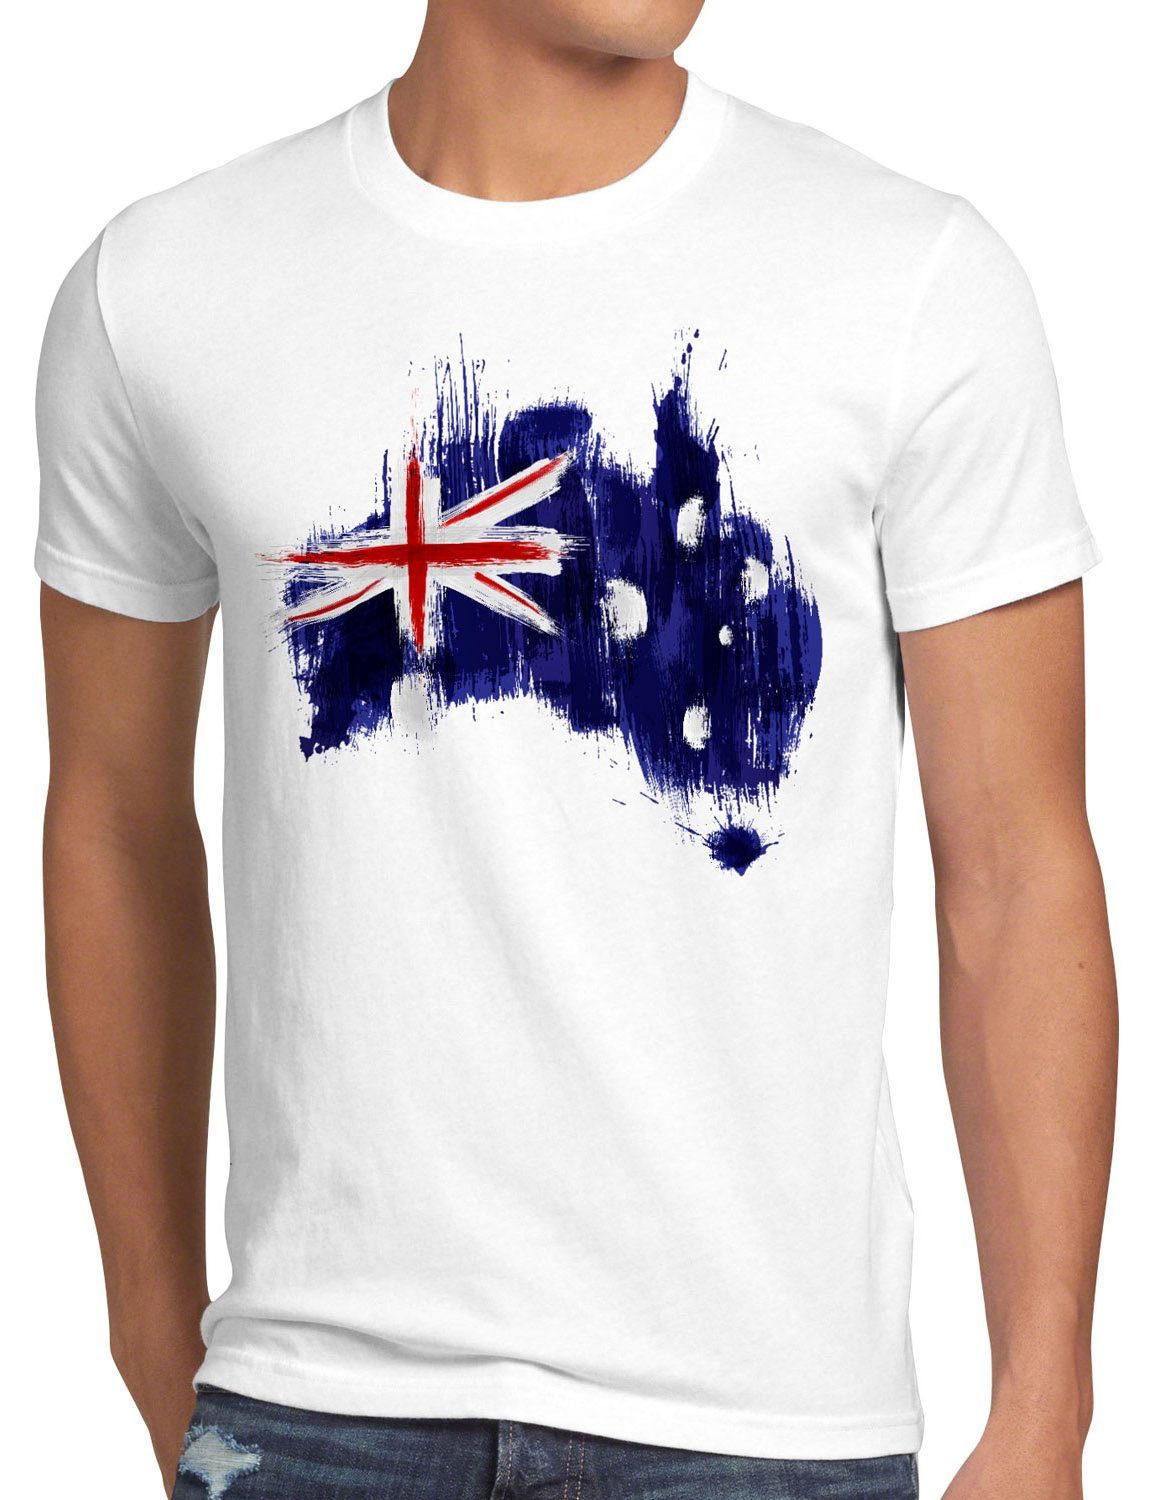 Herren T-Shirt Australien Print-Shirt Sport WM EM weiß Fahne Fußball style3 Flagge Australia